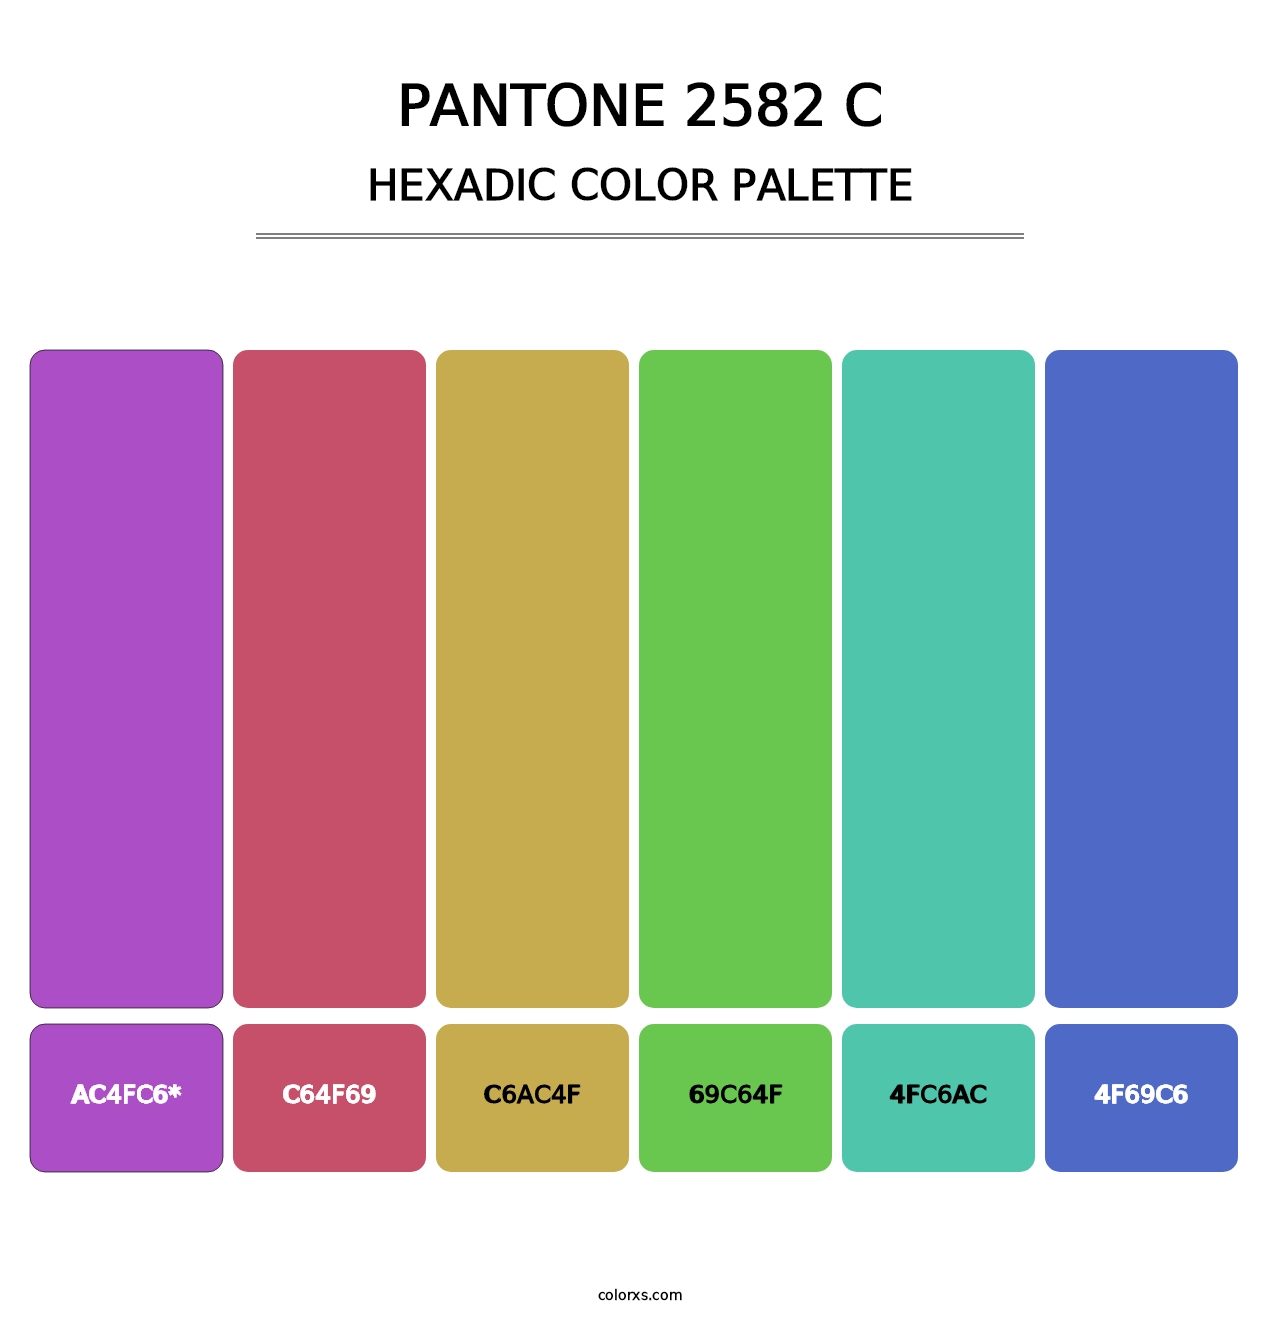 PANTONE 2582 C - Hexadic Color Palette